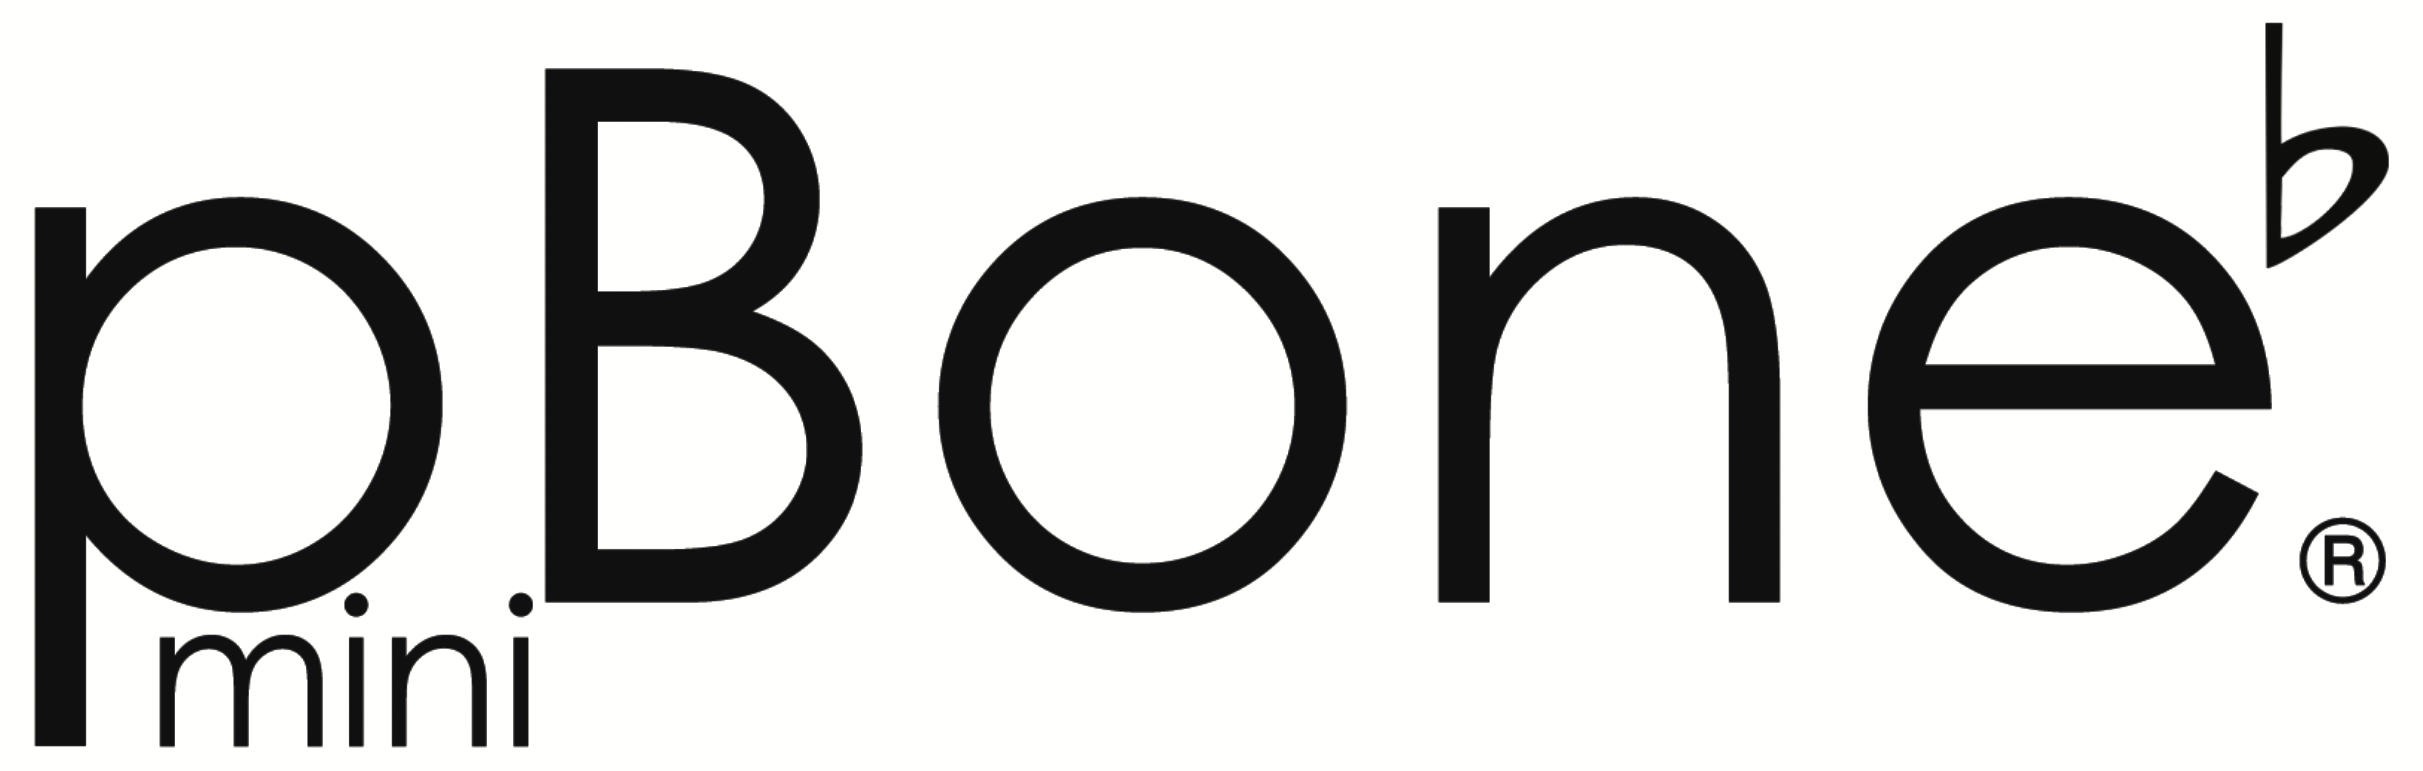 PBONE MINI logo